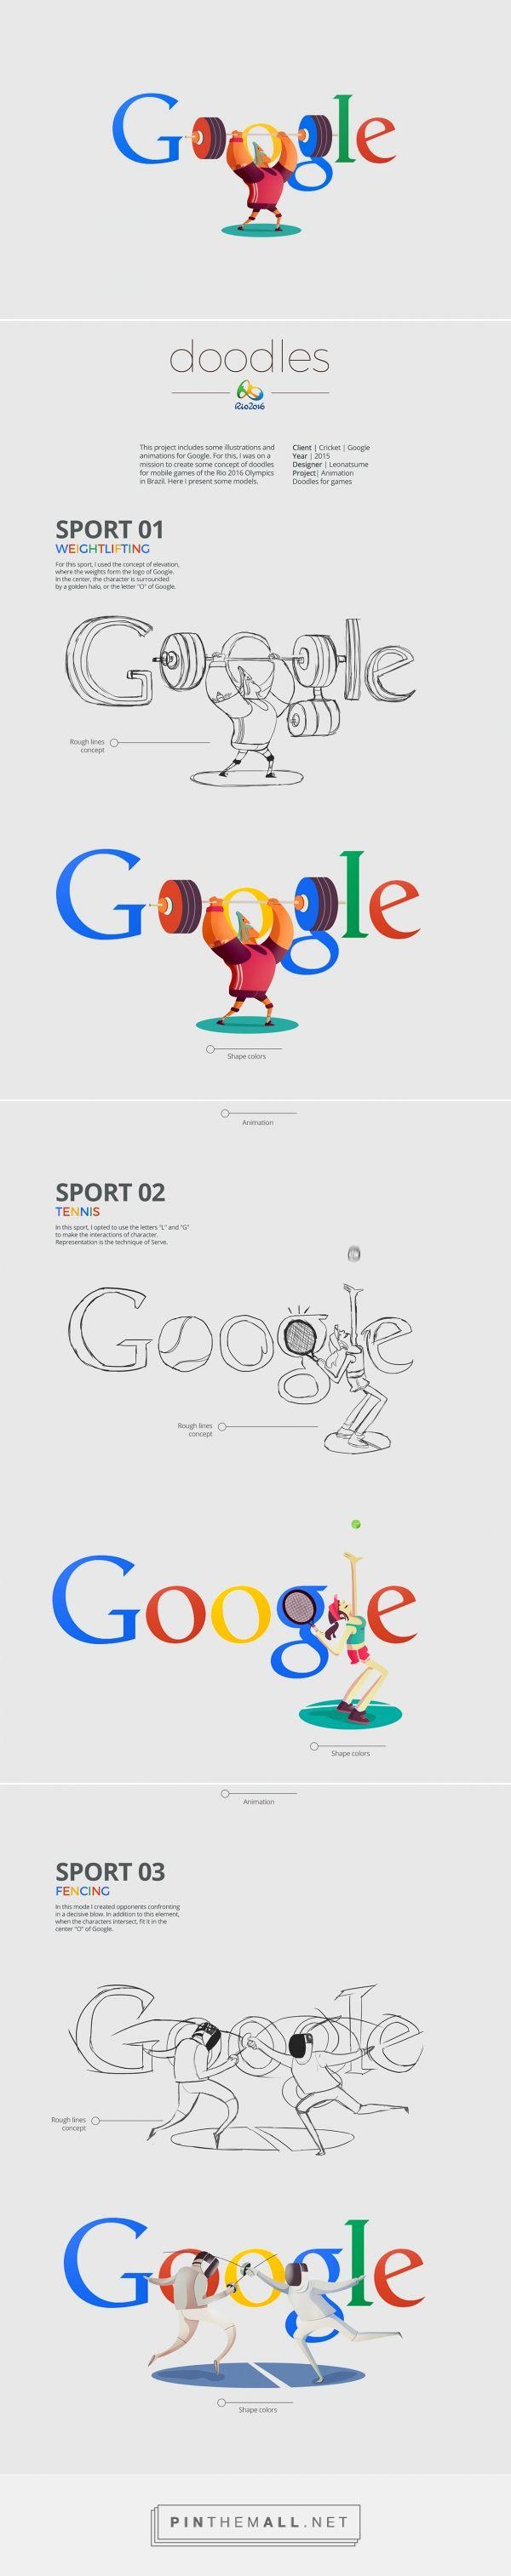 Halo Google Logo - Rio 2016 Olympic Games Google Doodle. Logo. Google